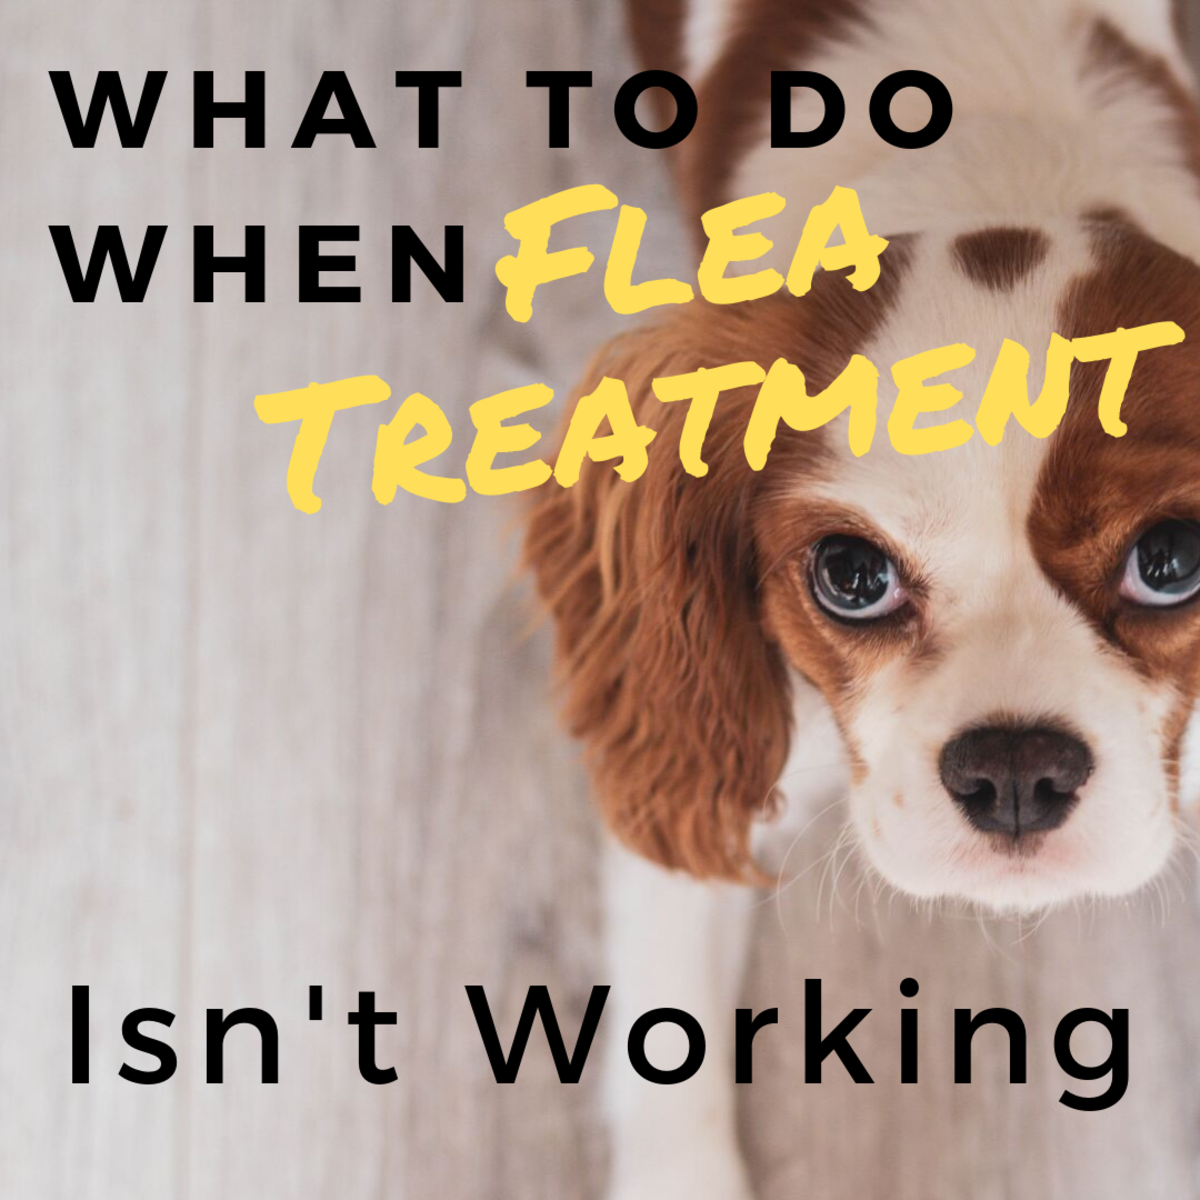 flea treatment killing dogs